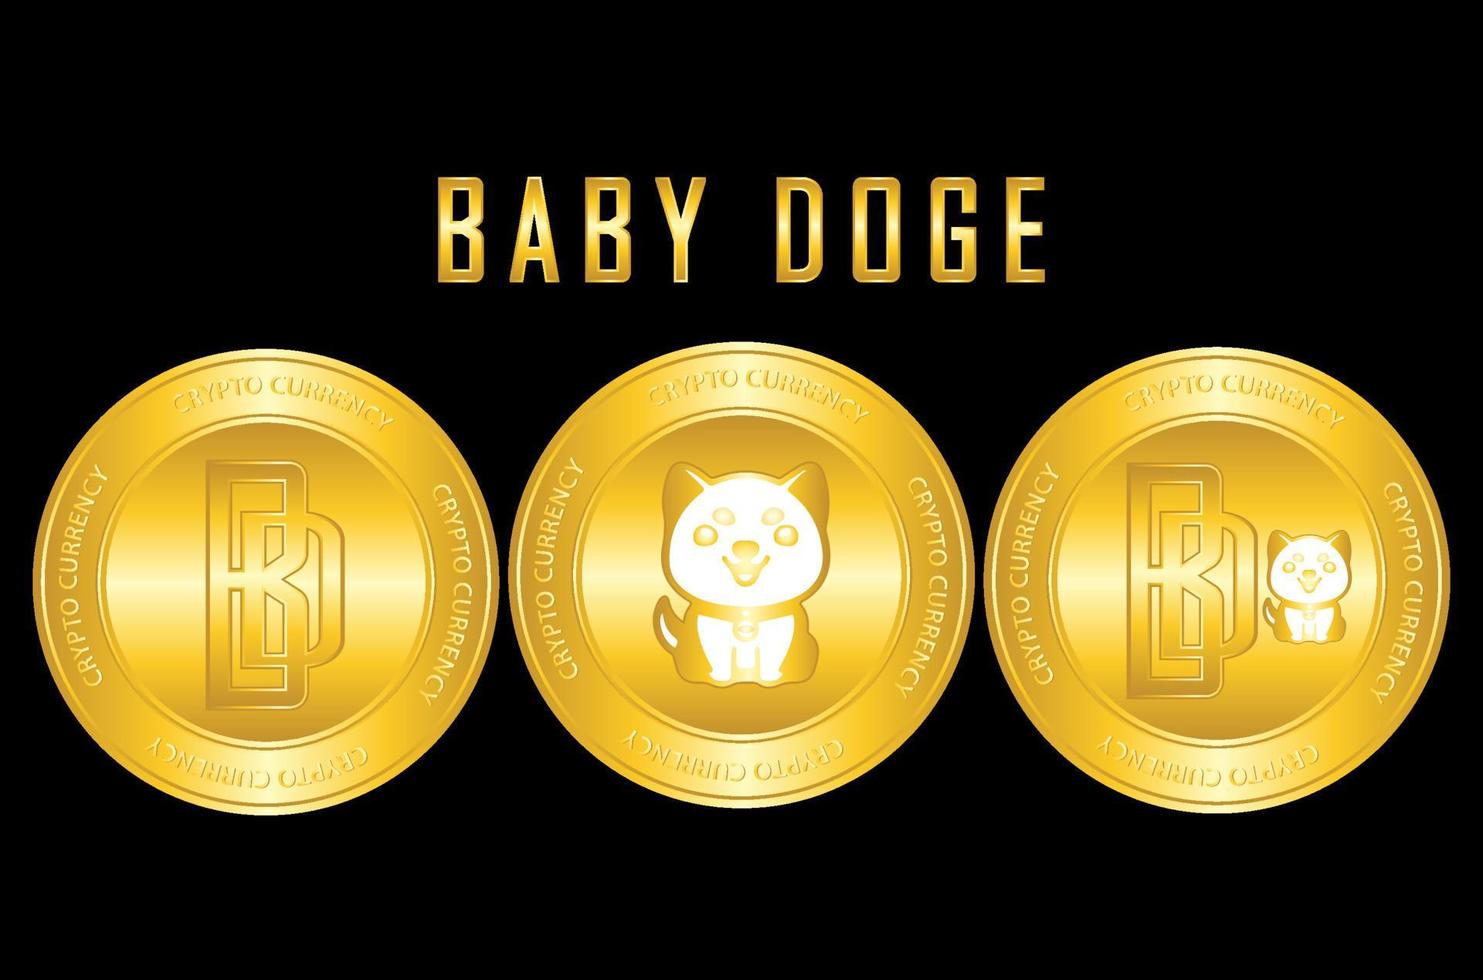 baby doge crypto valuta icon set logo met tekst en mascotte vector